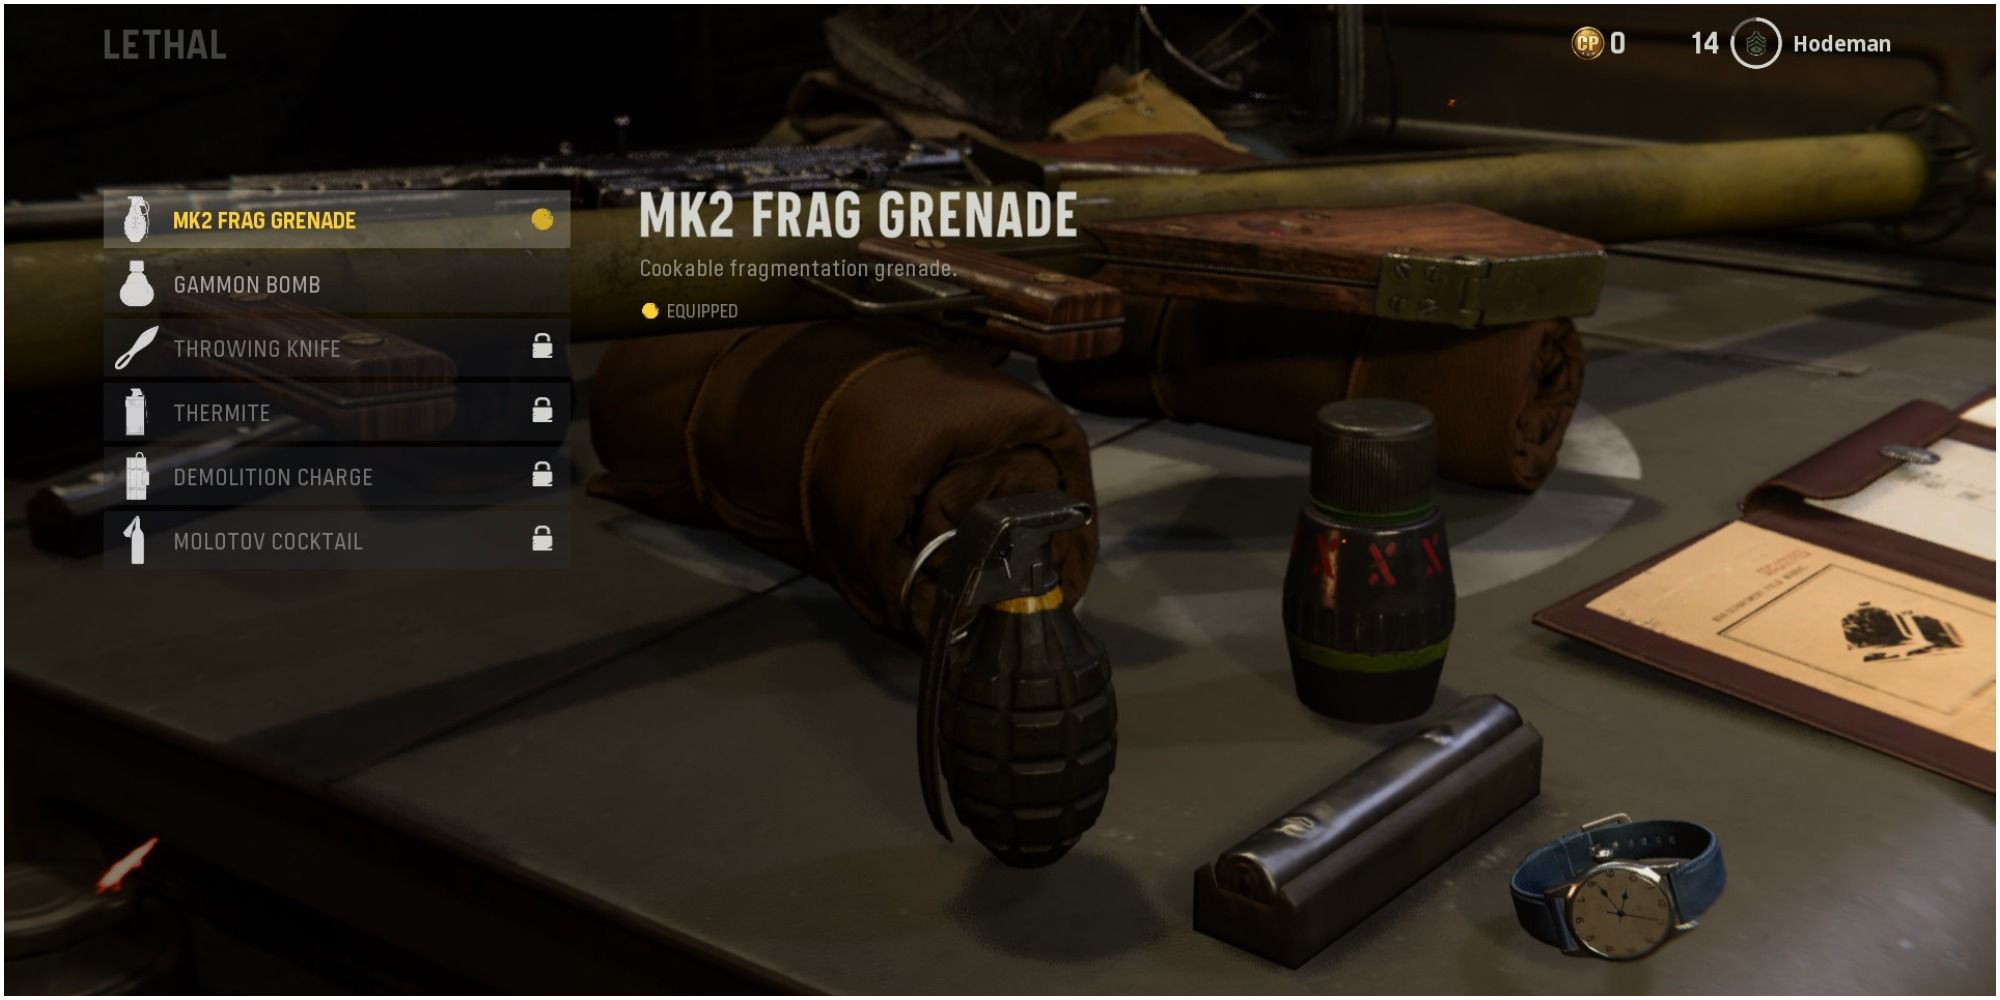 Call Of Duty Vanguard Description On The Lethal MK2 Frag Grenade